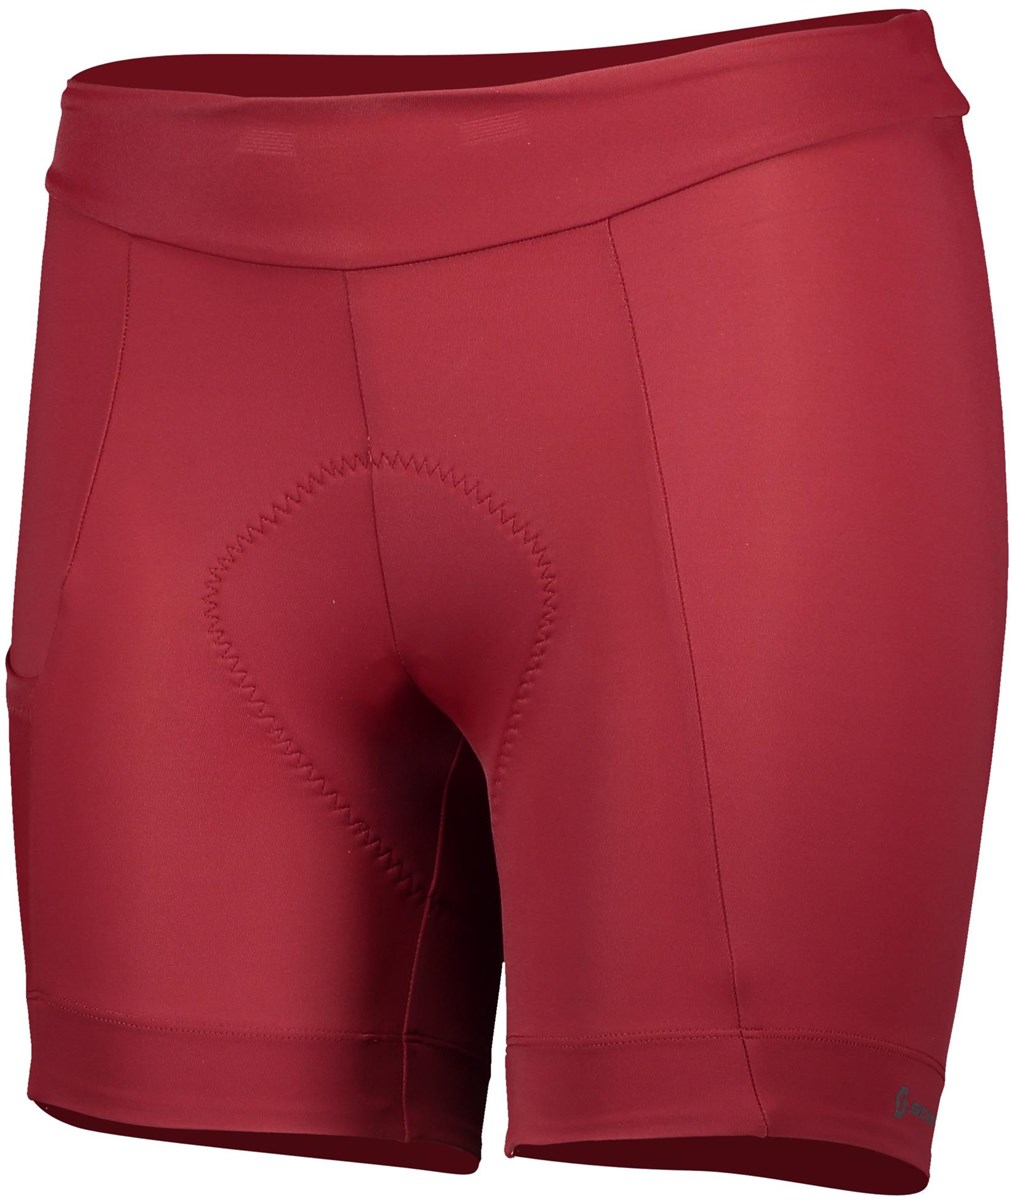 Scott Endurance 20 ++ Womens Shorts product image